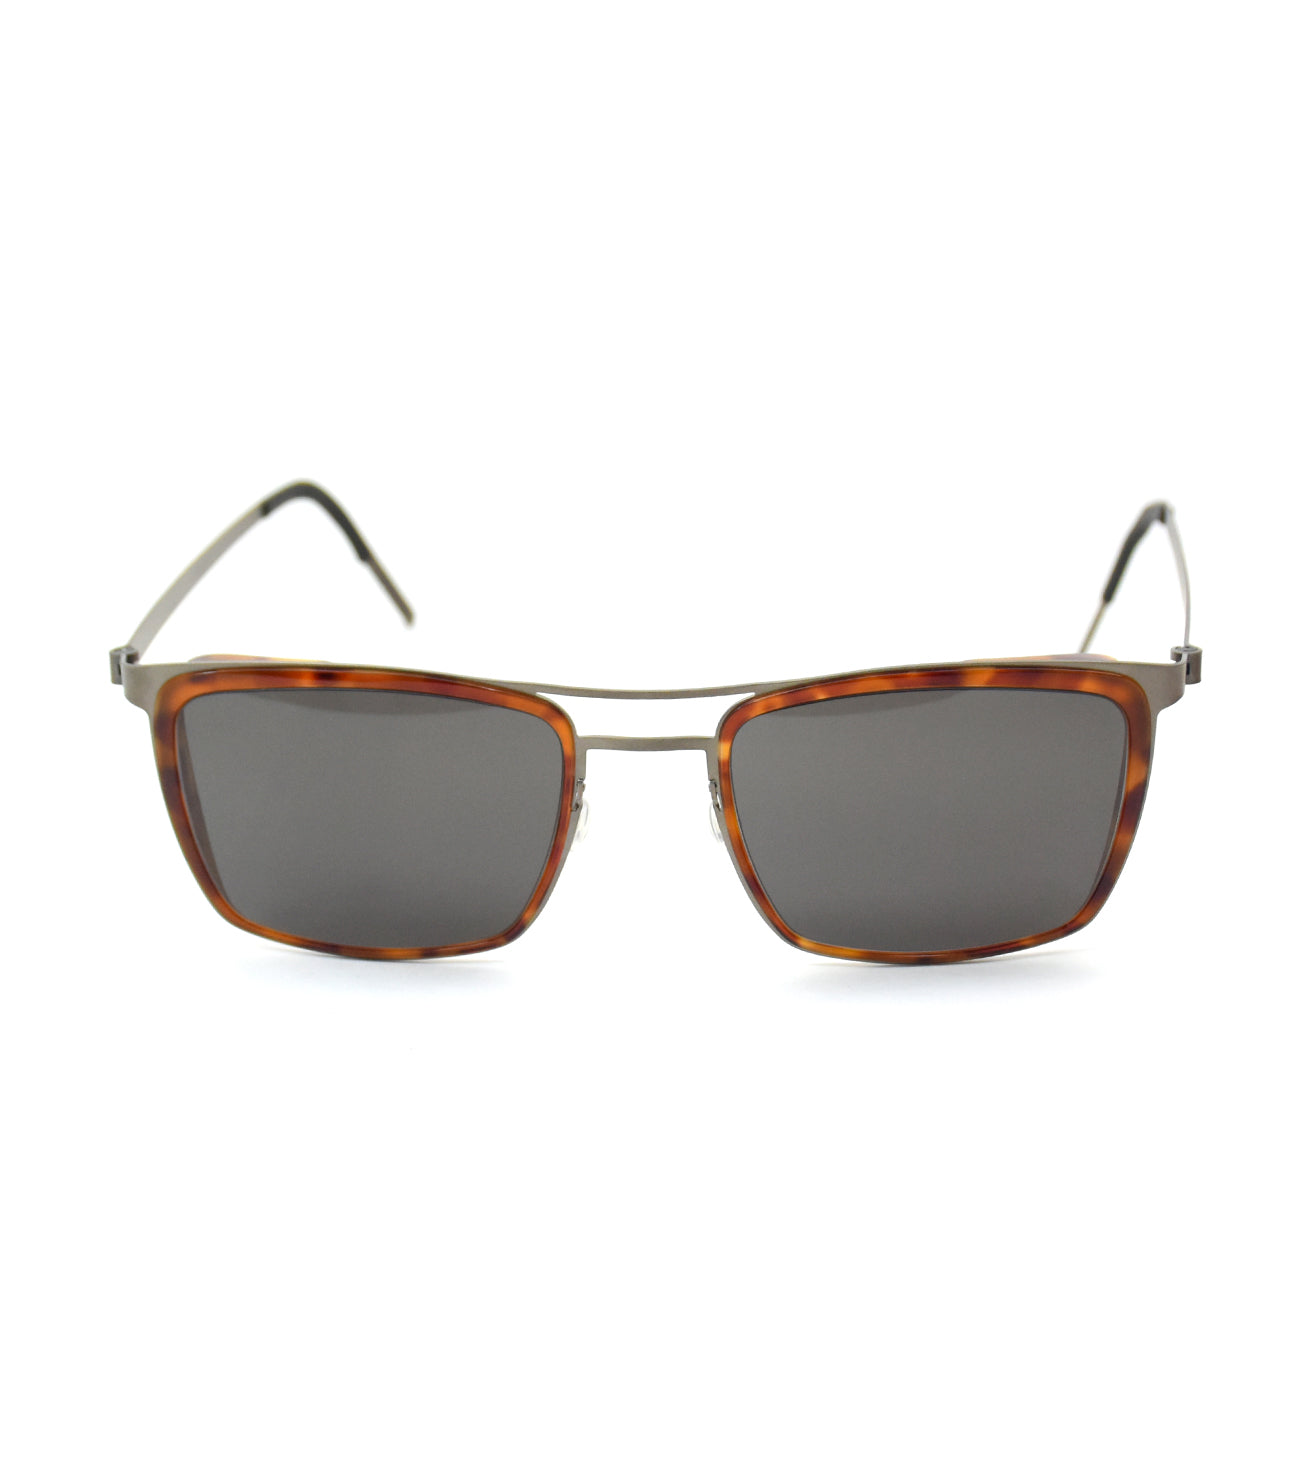 Lindberg Unisex Grey Square Sunglasses